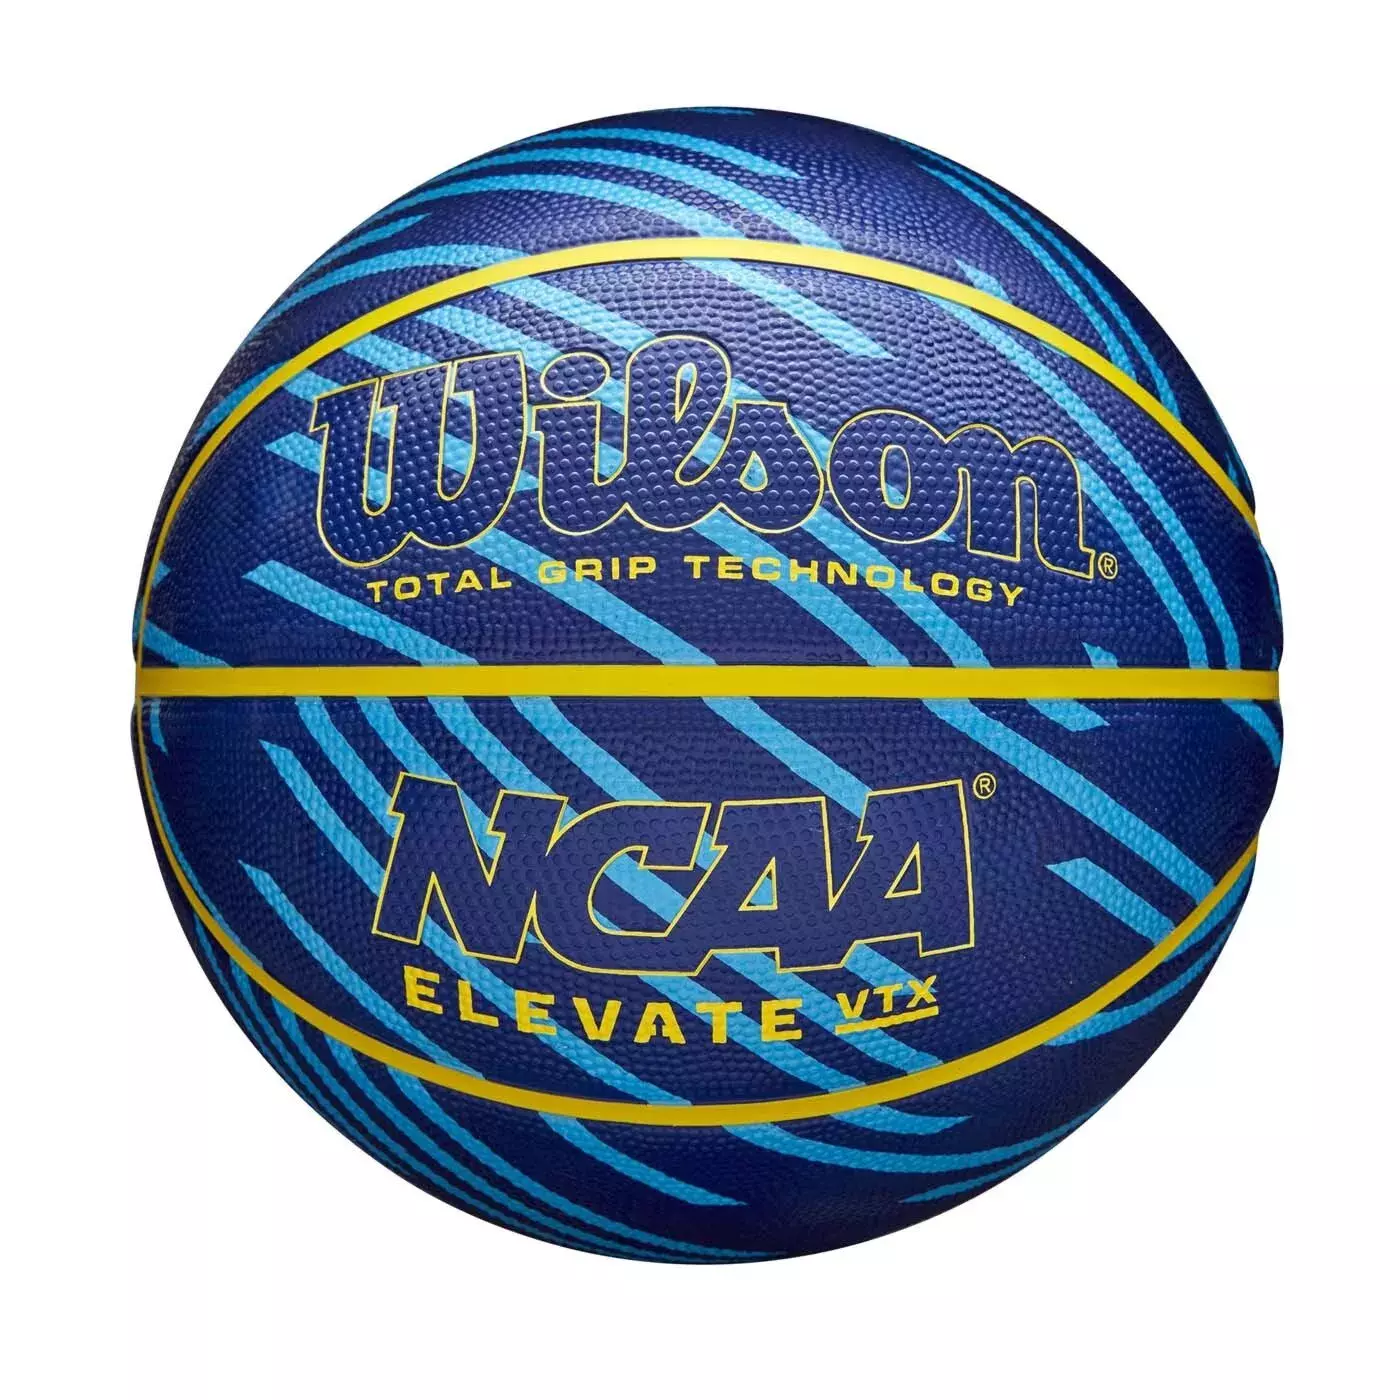 Piłka koszowa Wilson Elevate VTX orange-blue 3006802XB7 7